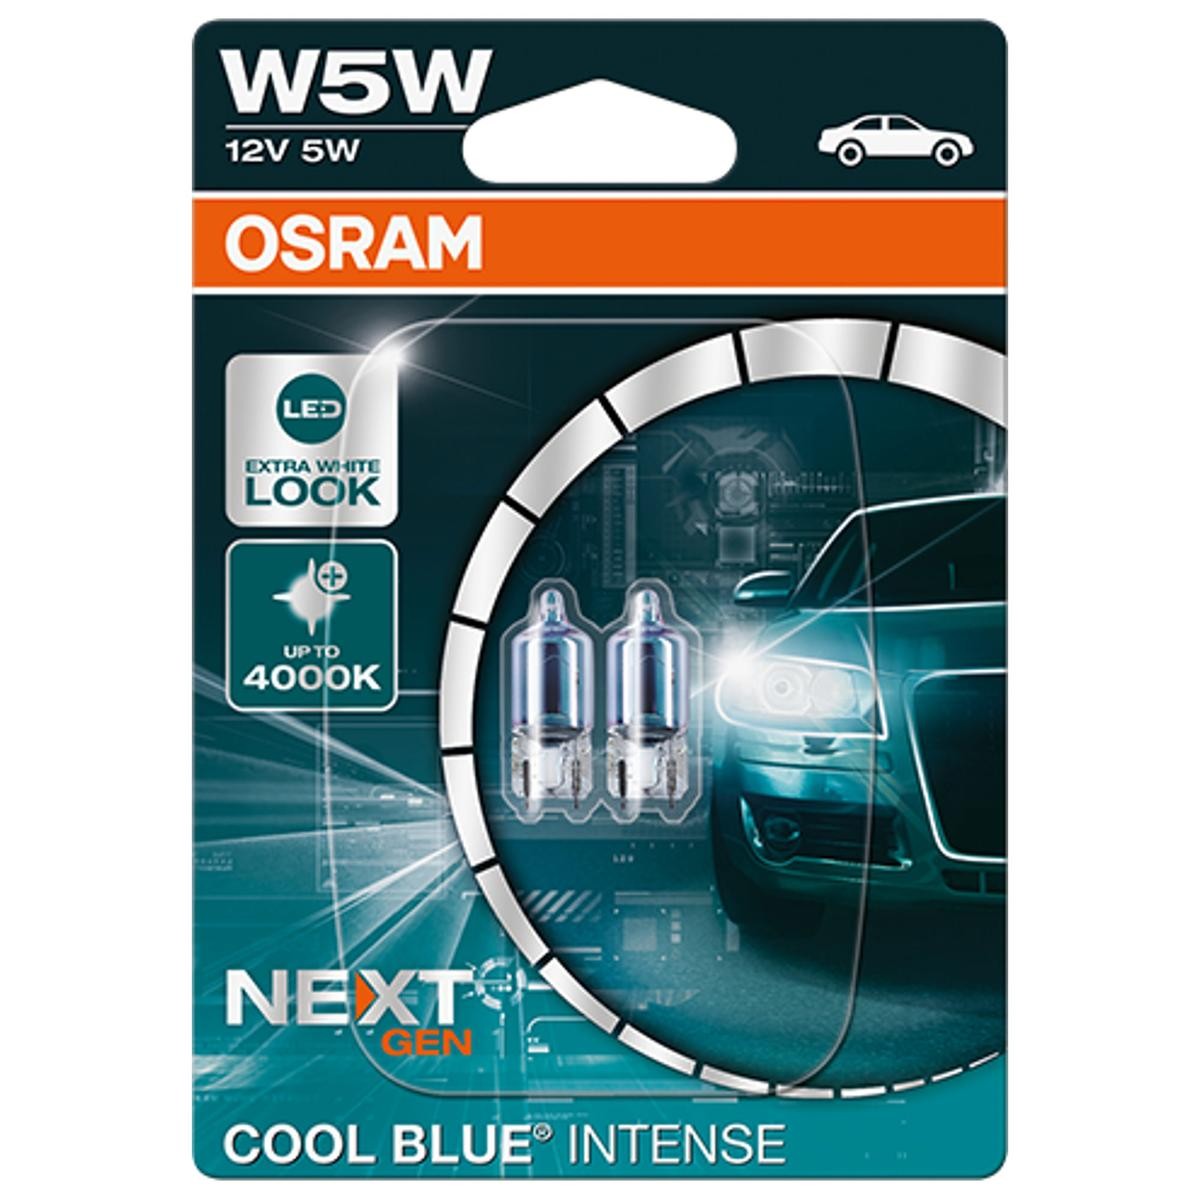 KTM SUPERBIKE Blinkerbirne 12V 5W, W5W OSRAM COOL BLUE INTENSE next Generation 2825CBN-02B